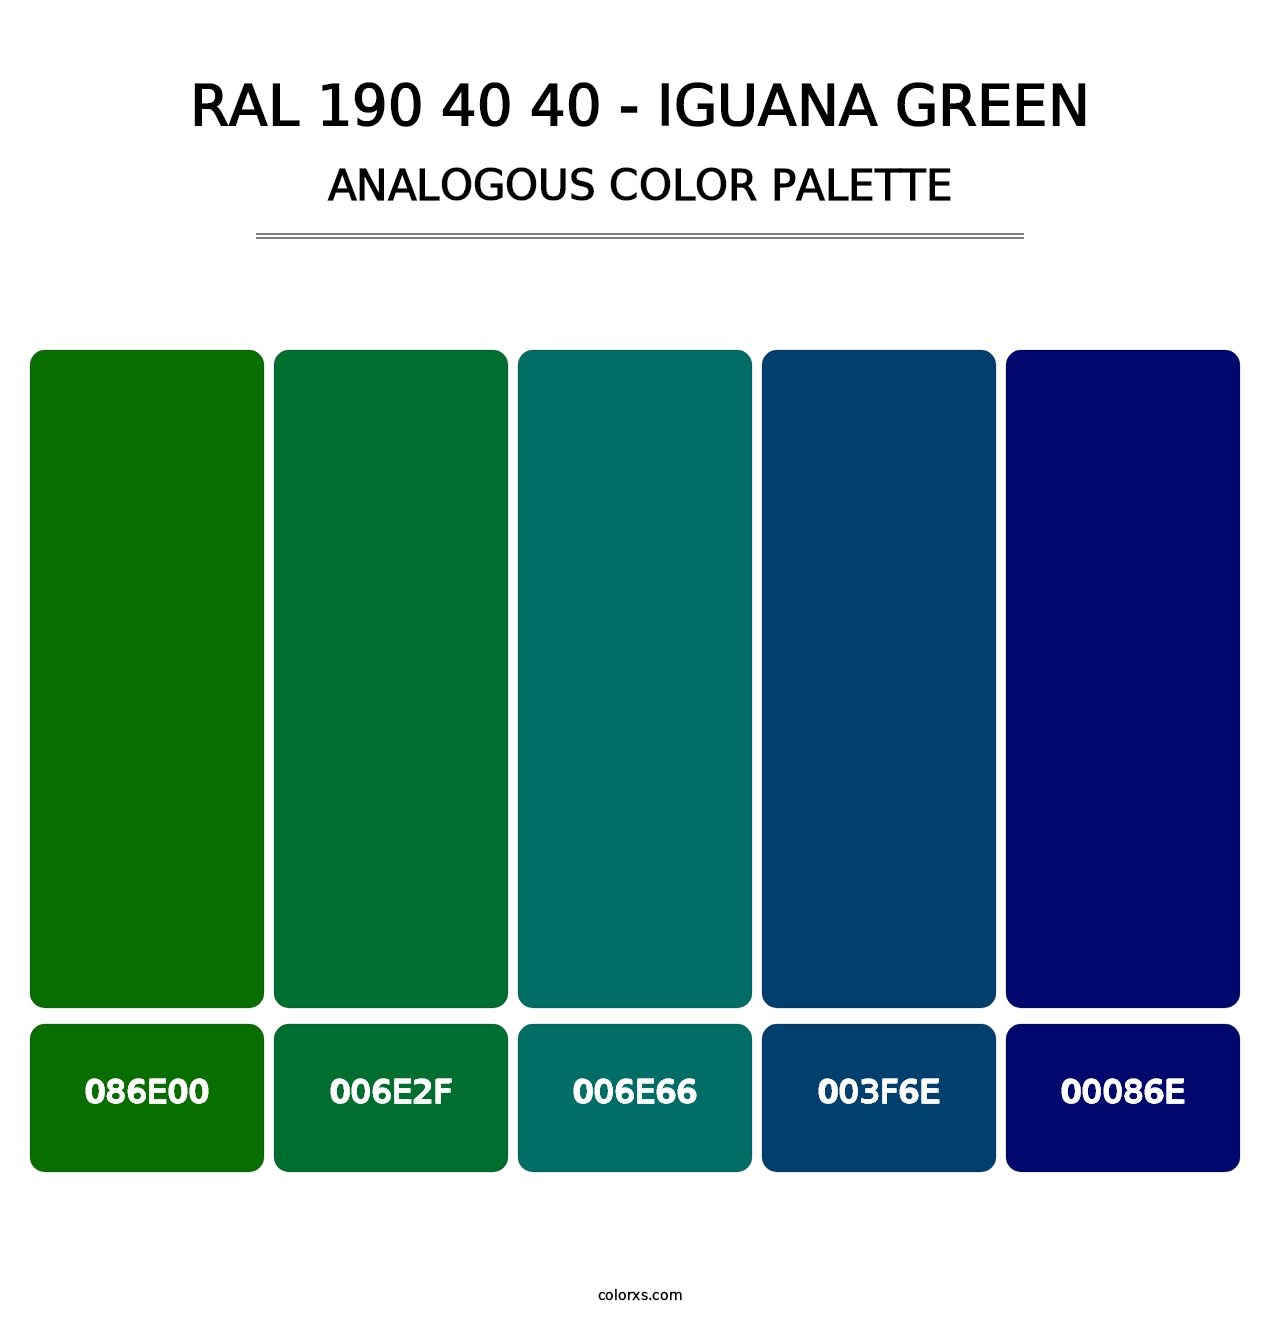 RAL 190 40 40 - Iguana Green - Analogous Color Palette